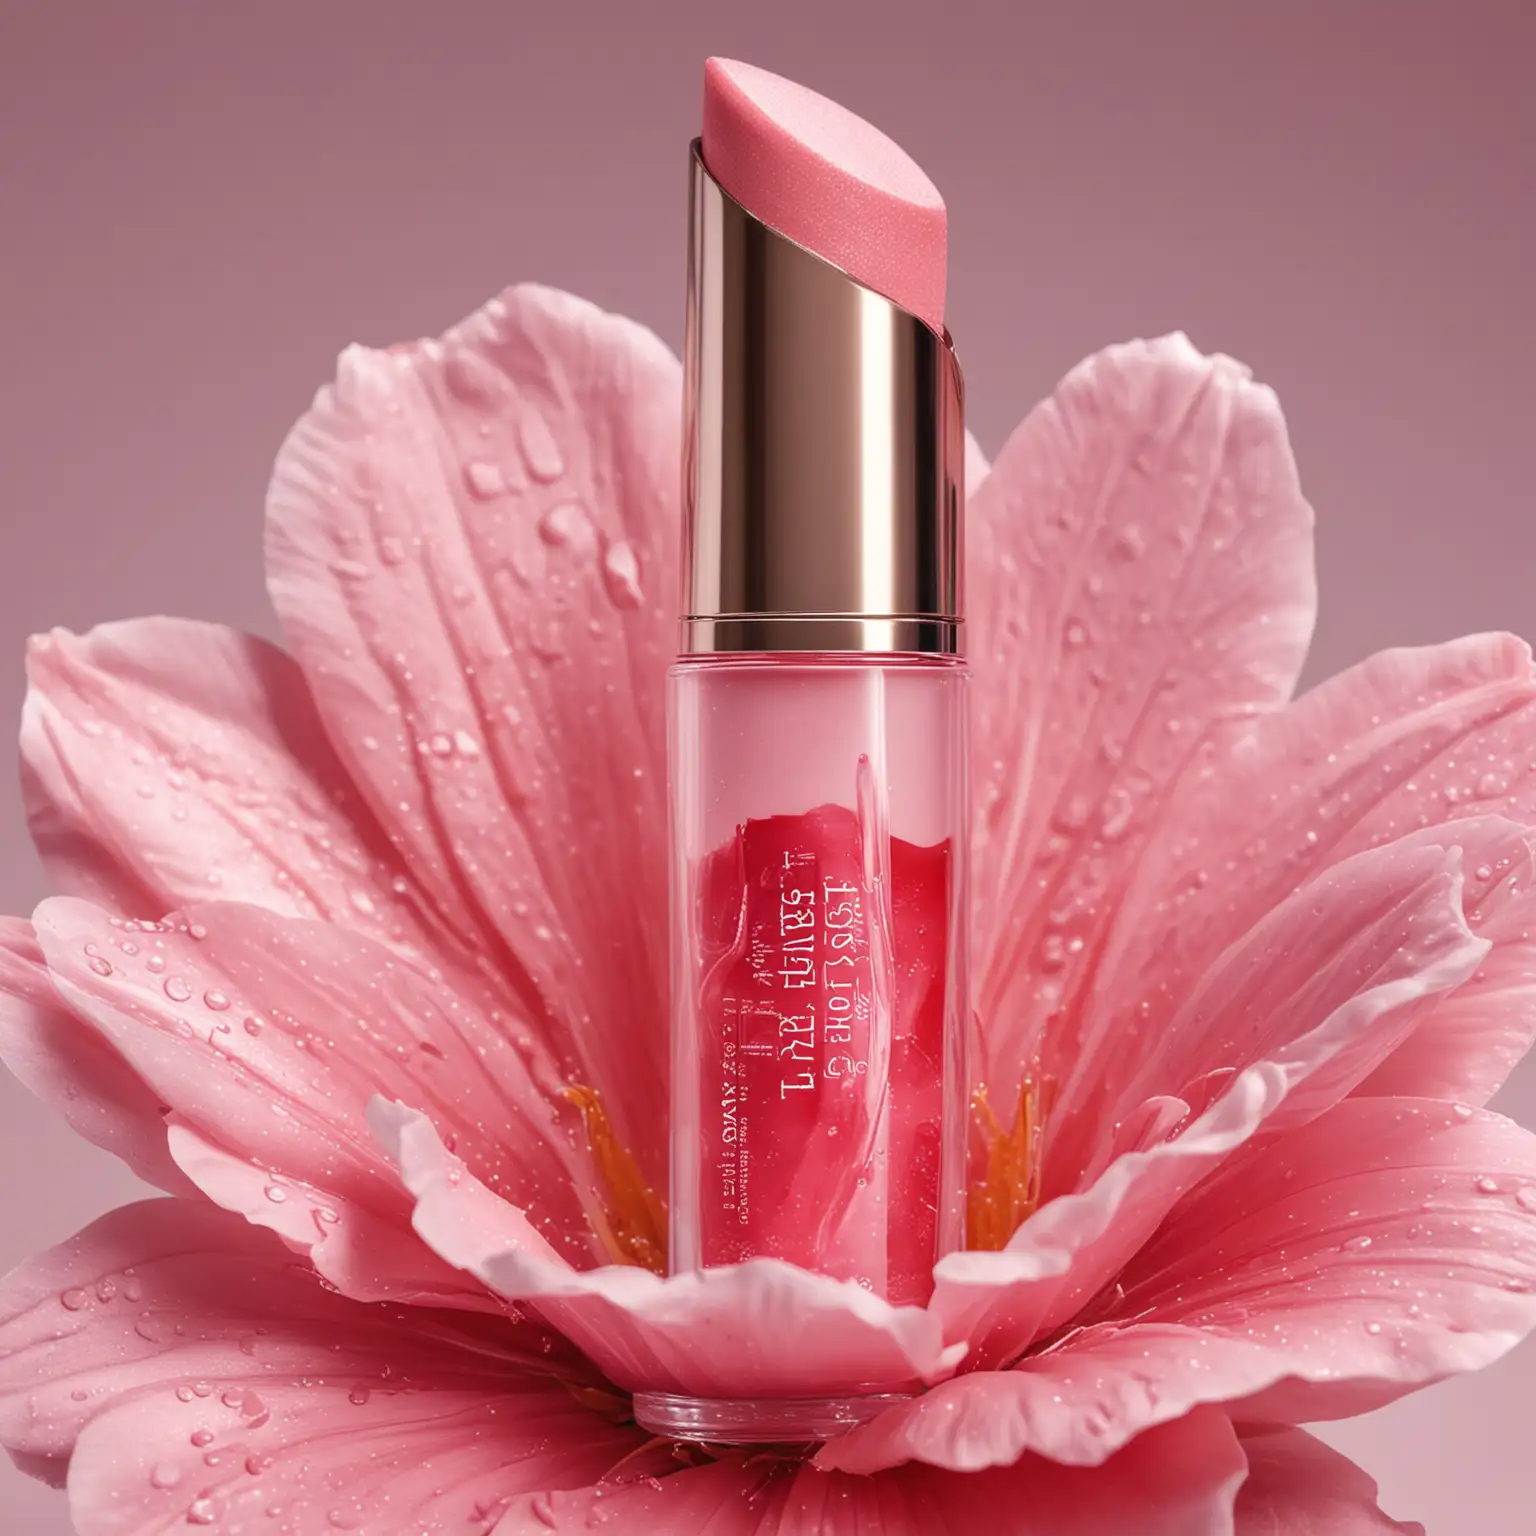 Lipgloss Product Bottle Nestled Within a Vibrant Flower